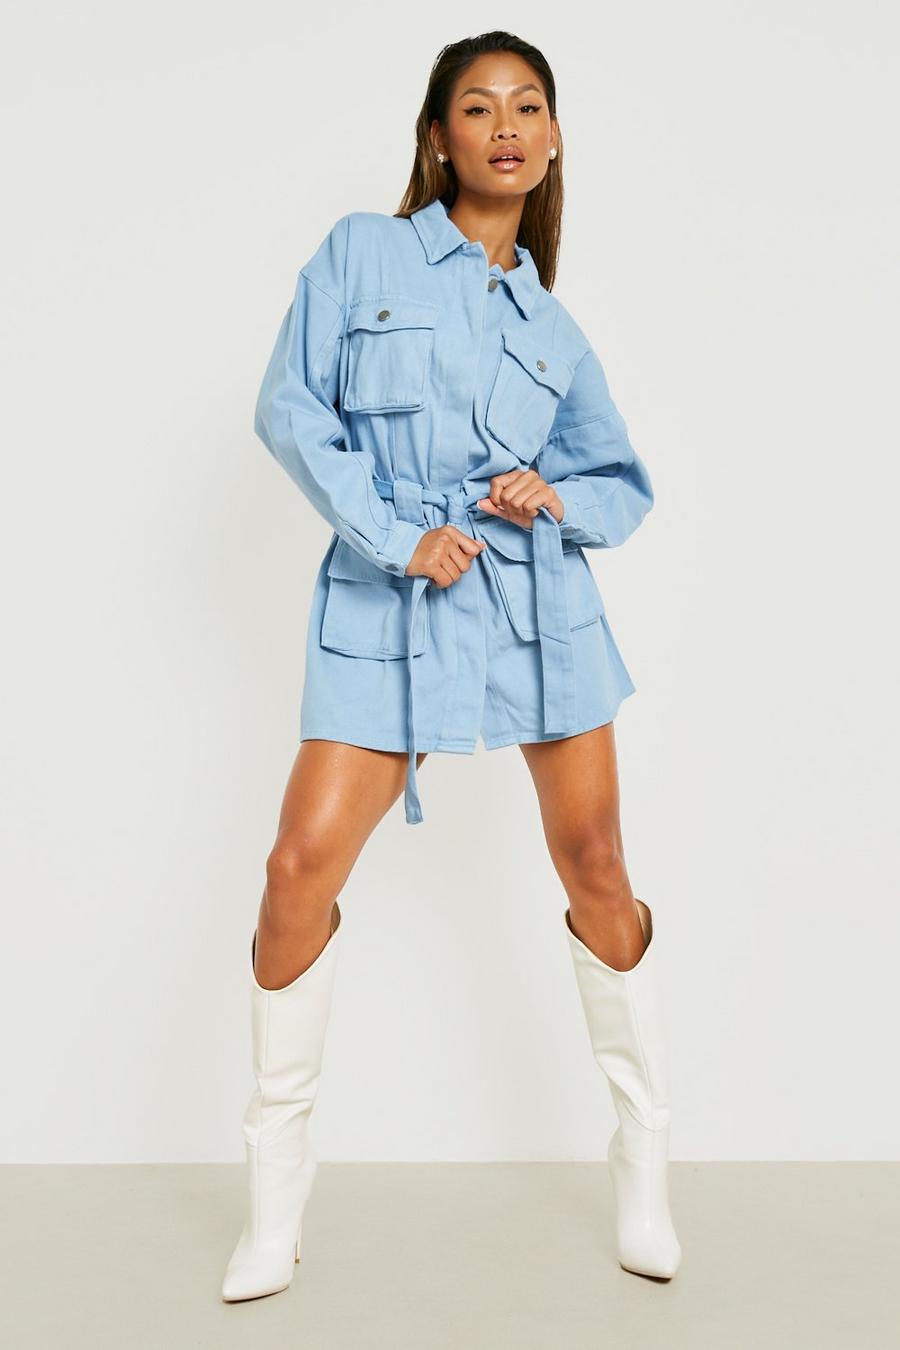 Megan Fox - Robe chemise premium style utilitaire - Disponible jusqu'au 52, Blue